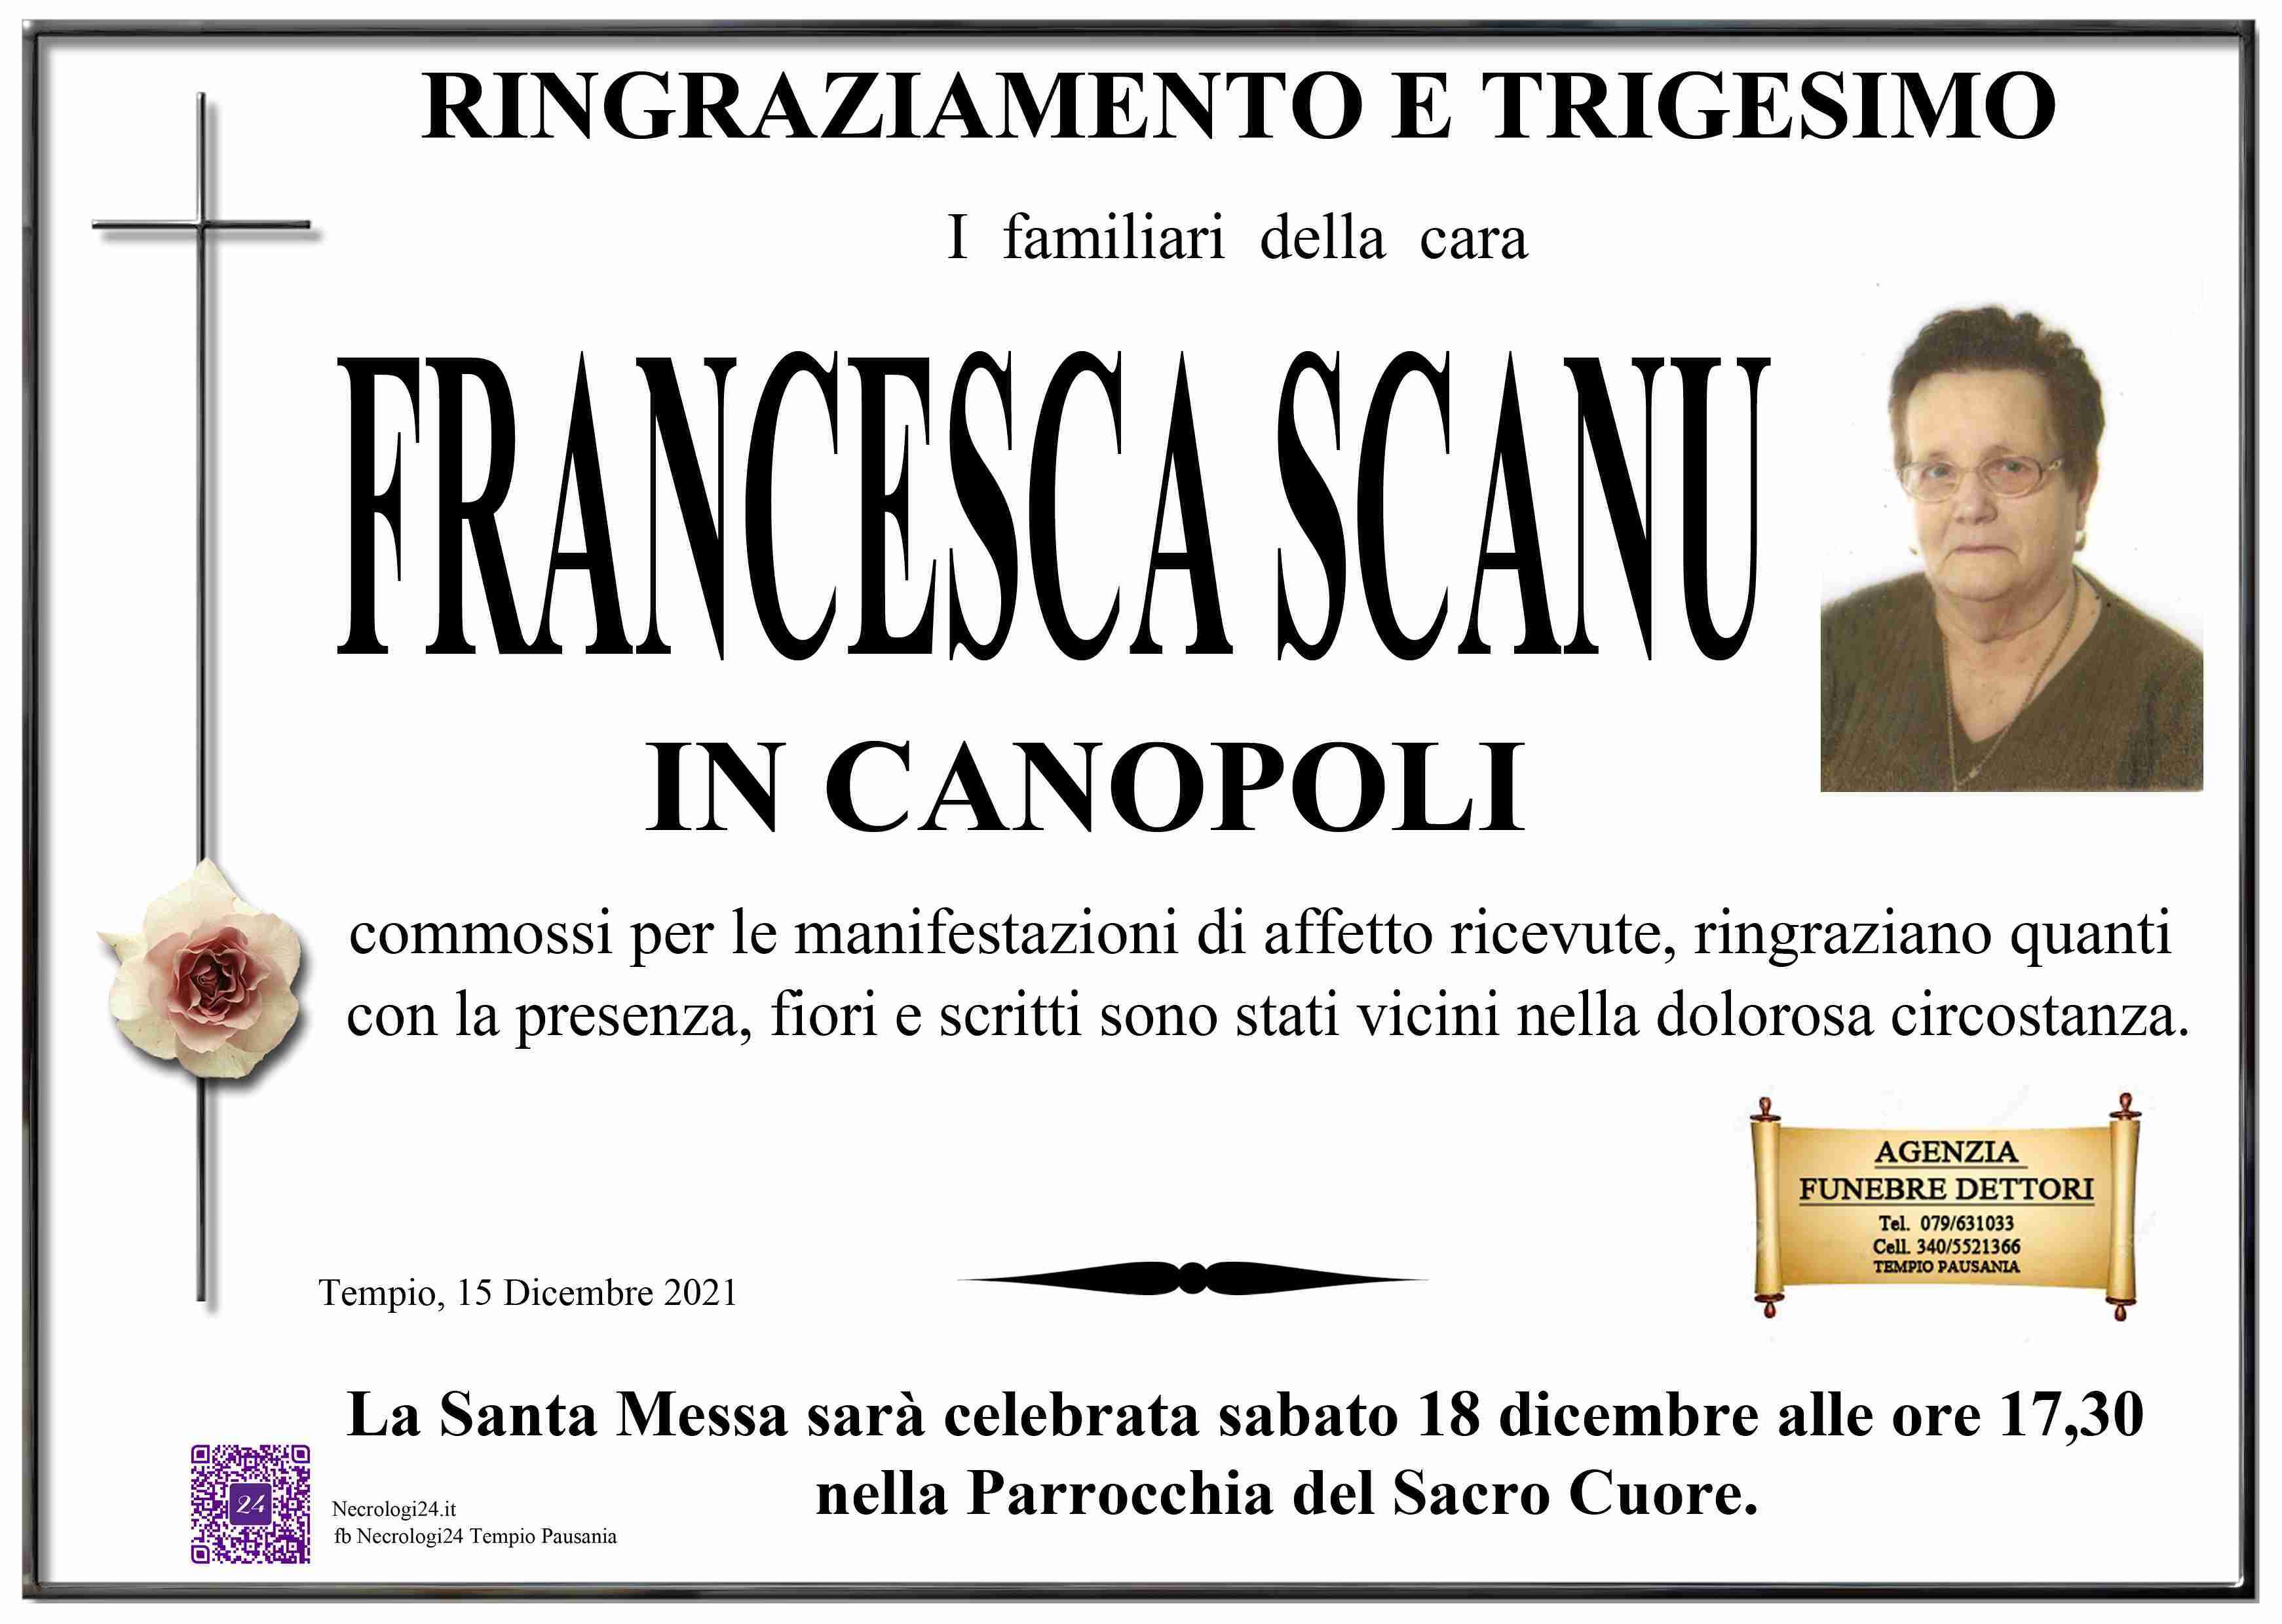 Francesca Scanu